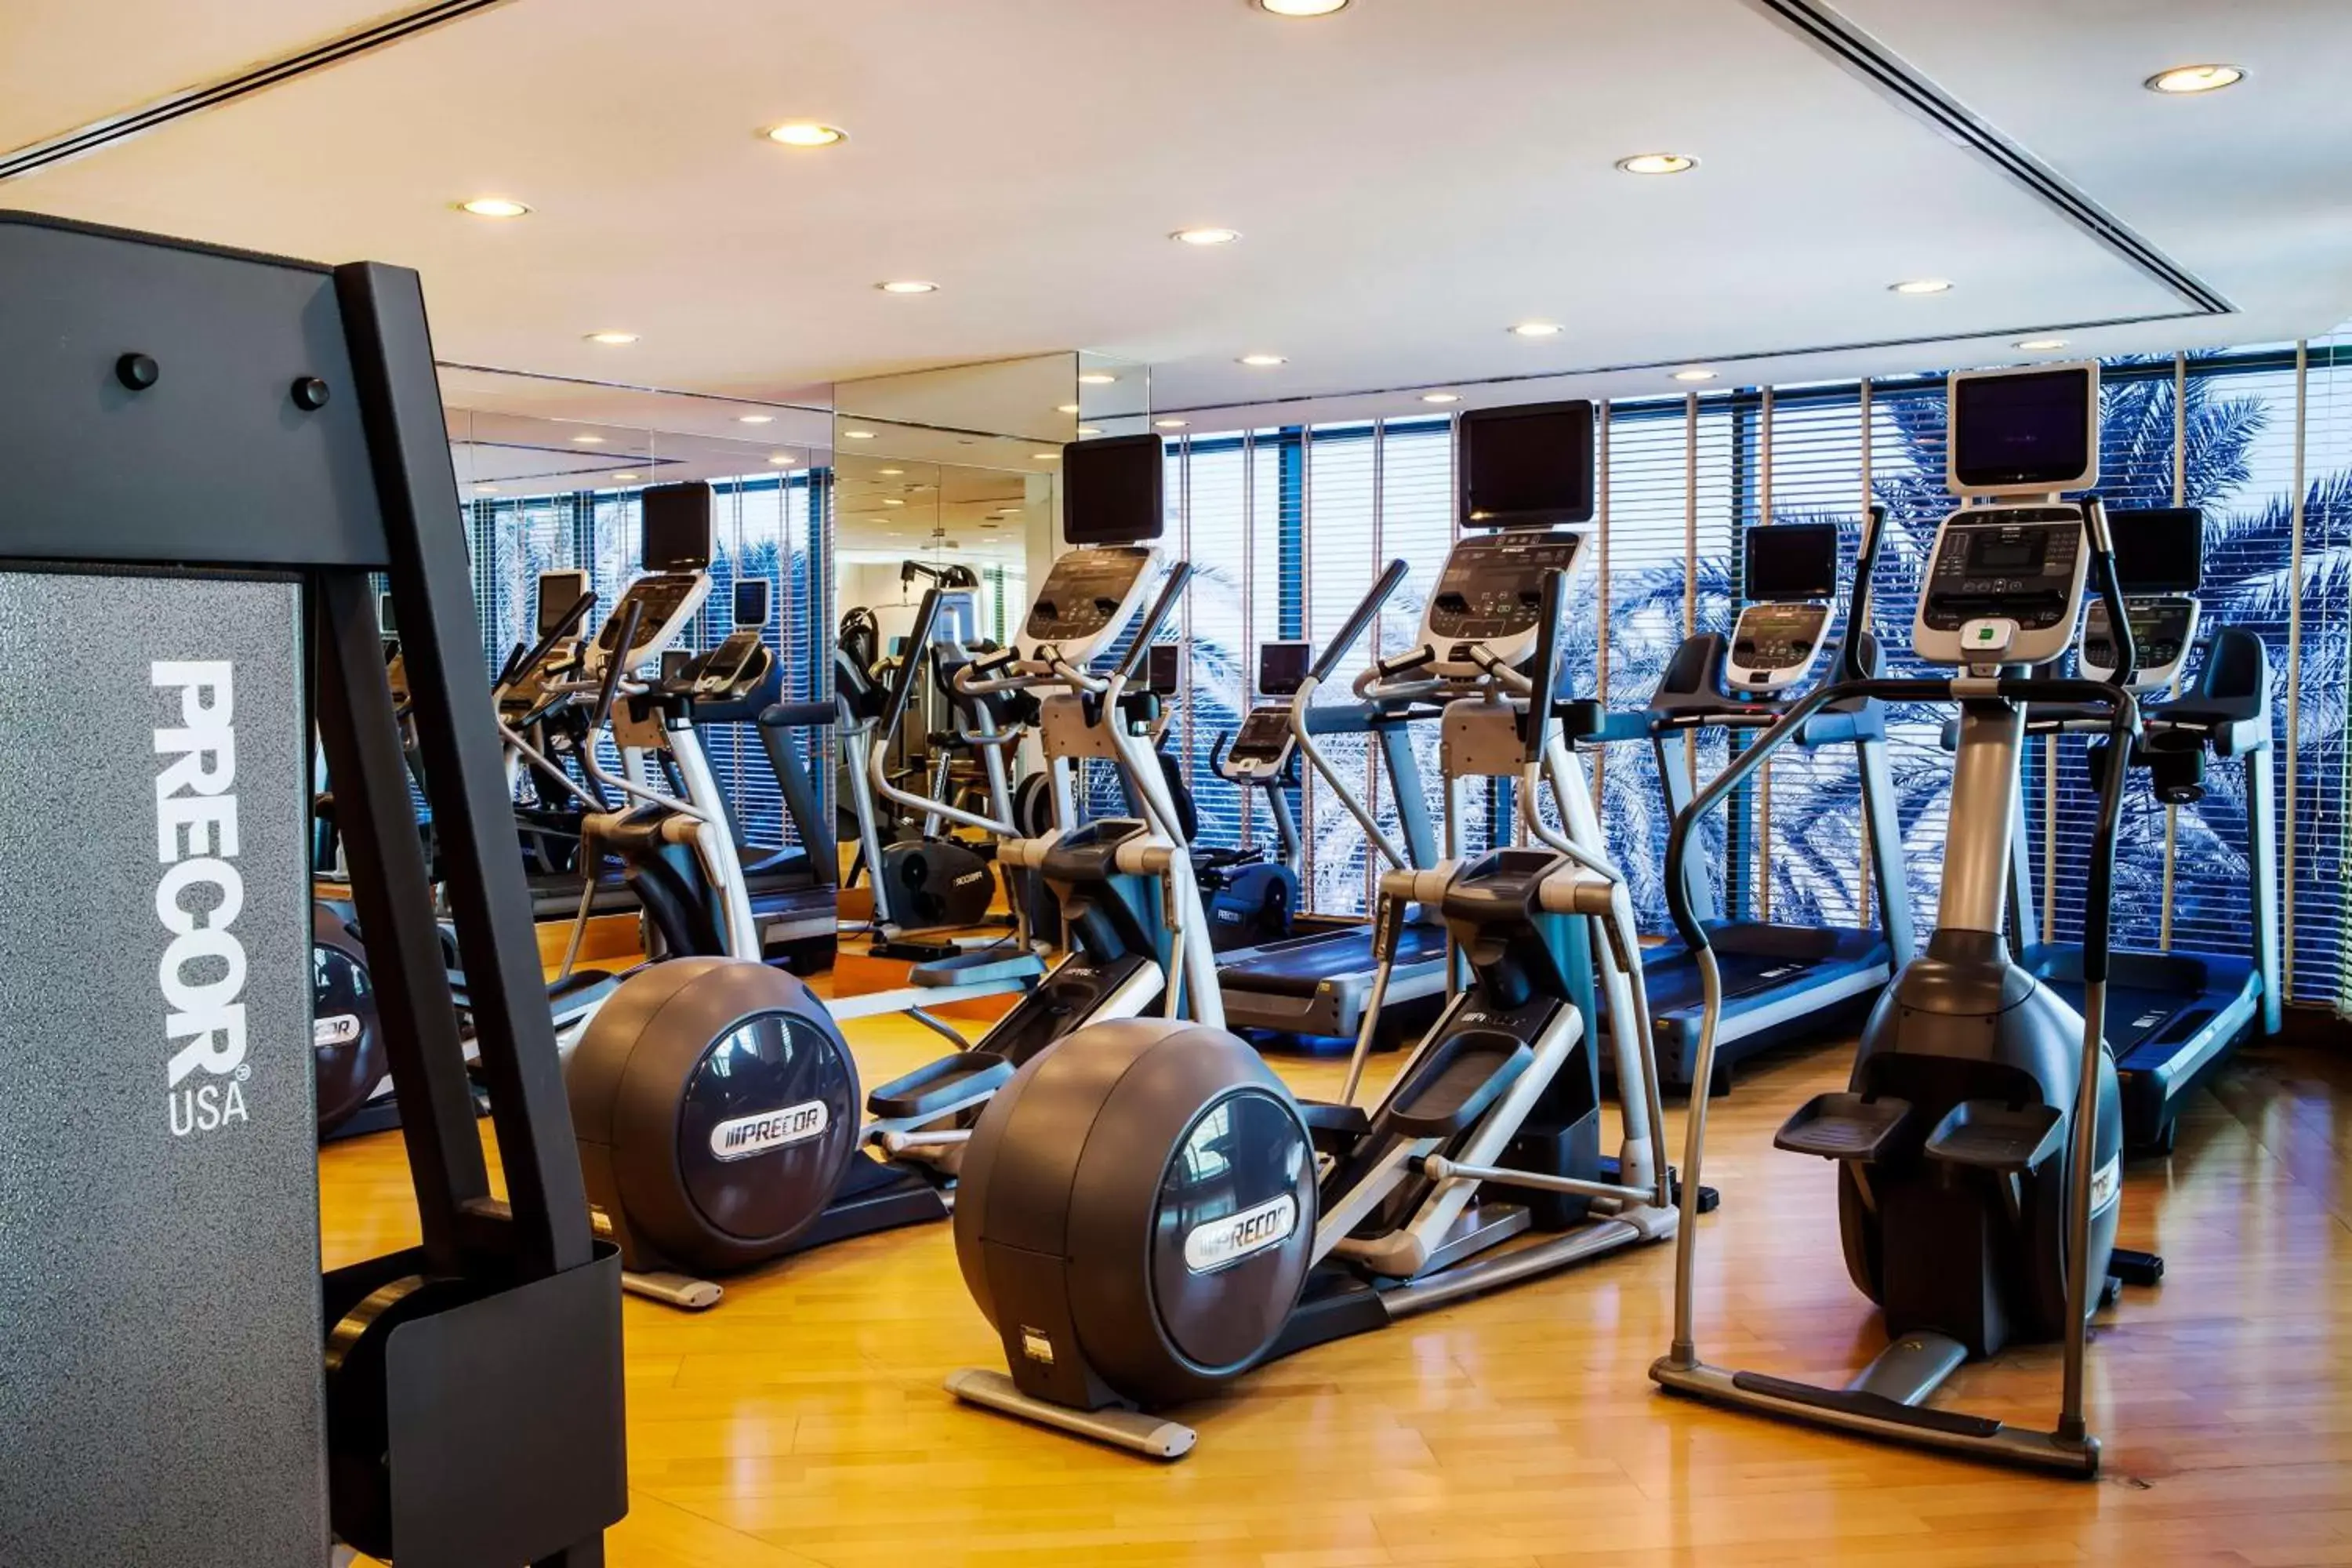 Fitness centre/facilities, Fitness Center/Facilities in Hilton Dubai Jumeirah